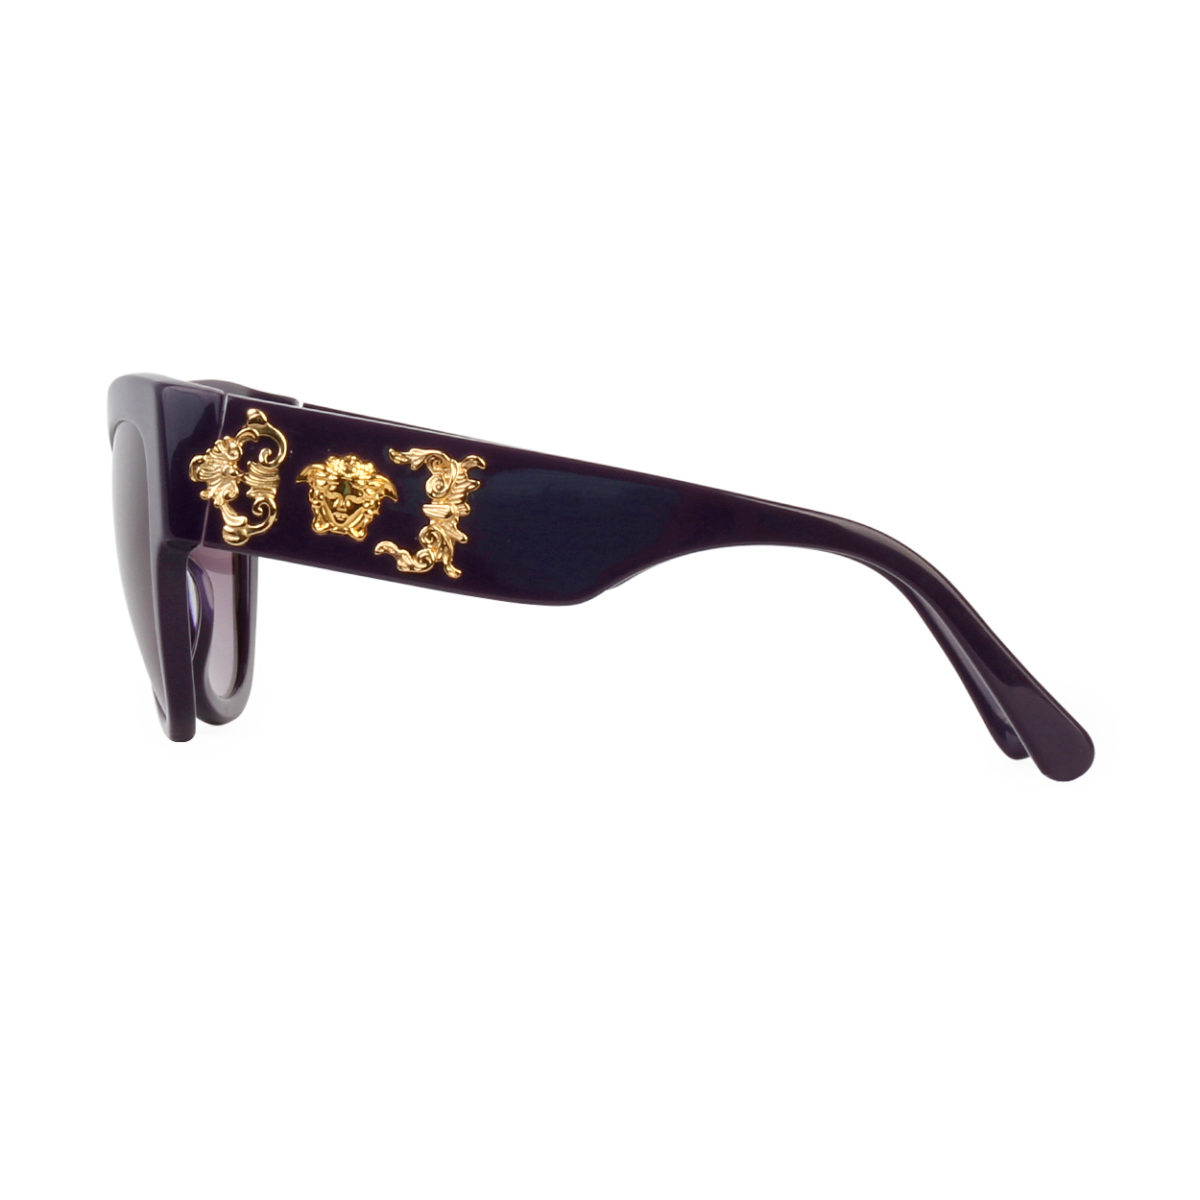 versace logo glasses